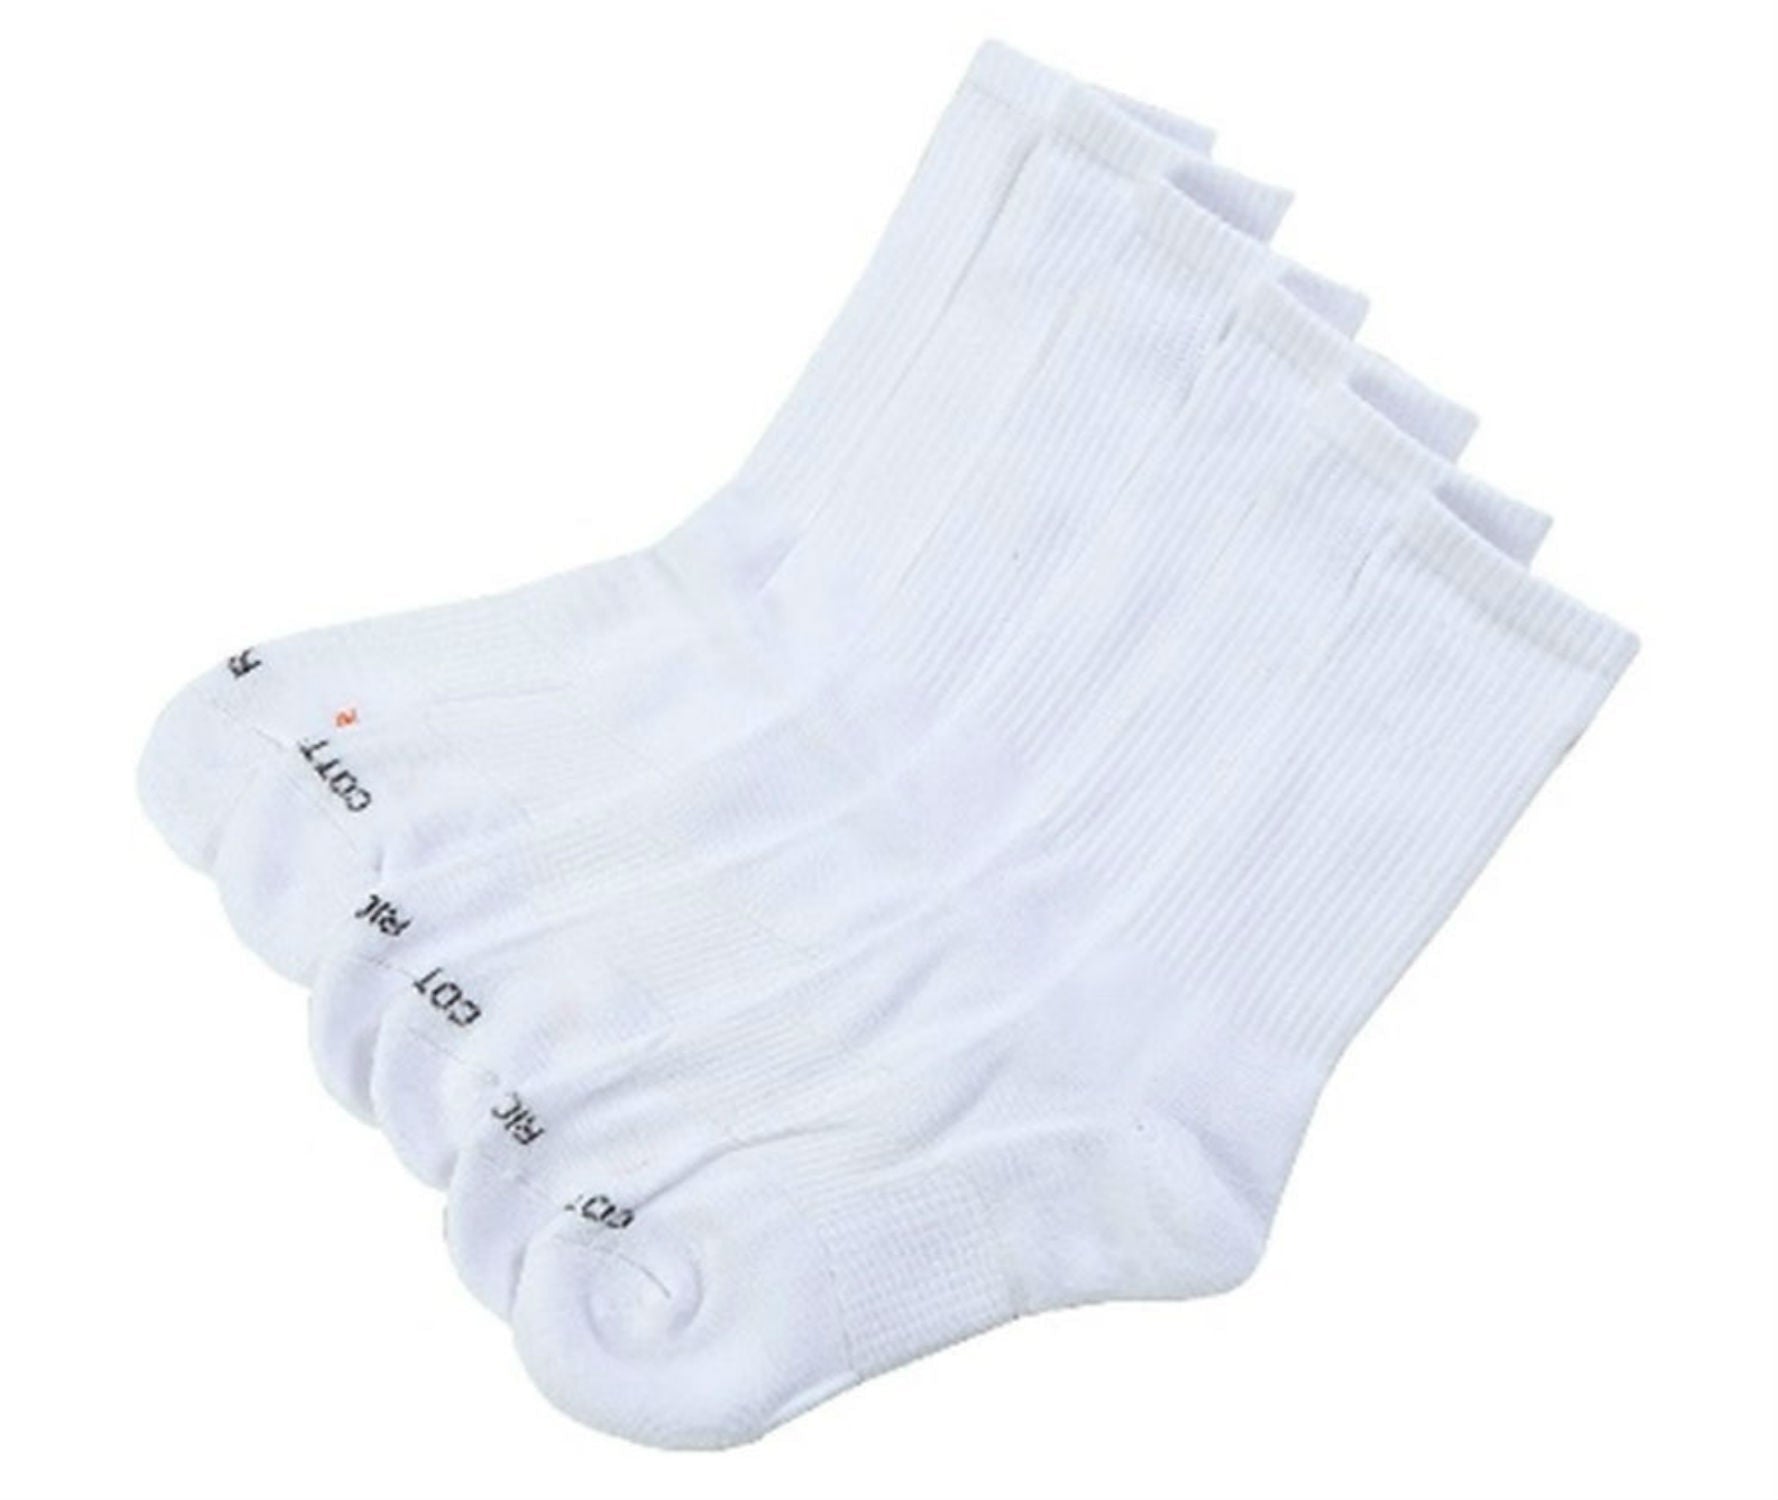 Rich Cotton Crew Cut Socks - DRI-FIT Cushioned Socks (White)